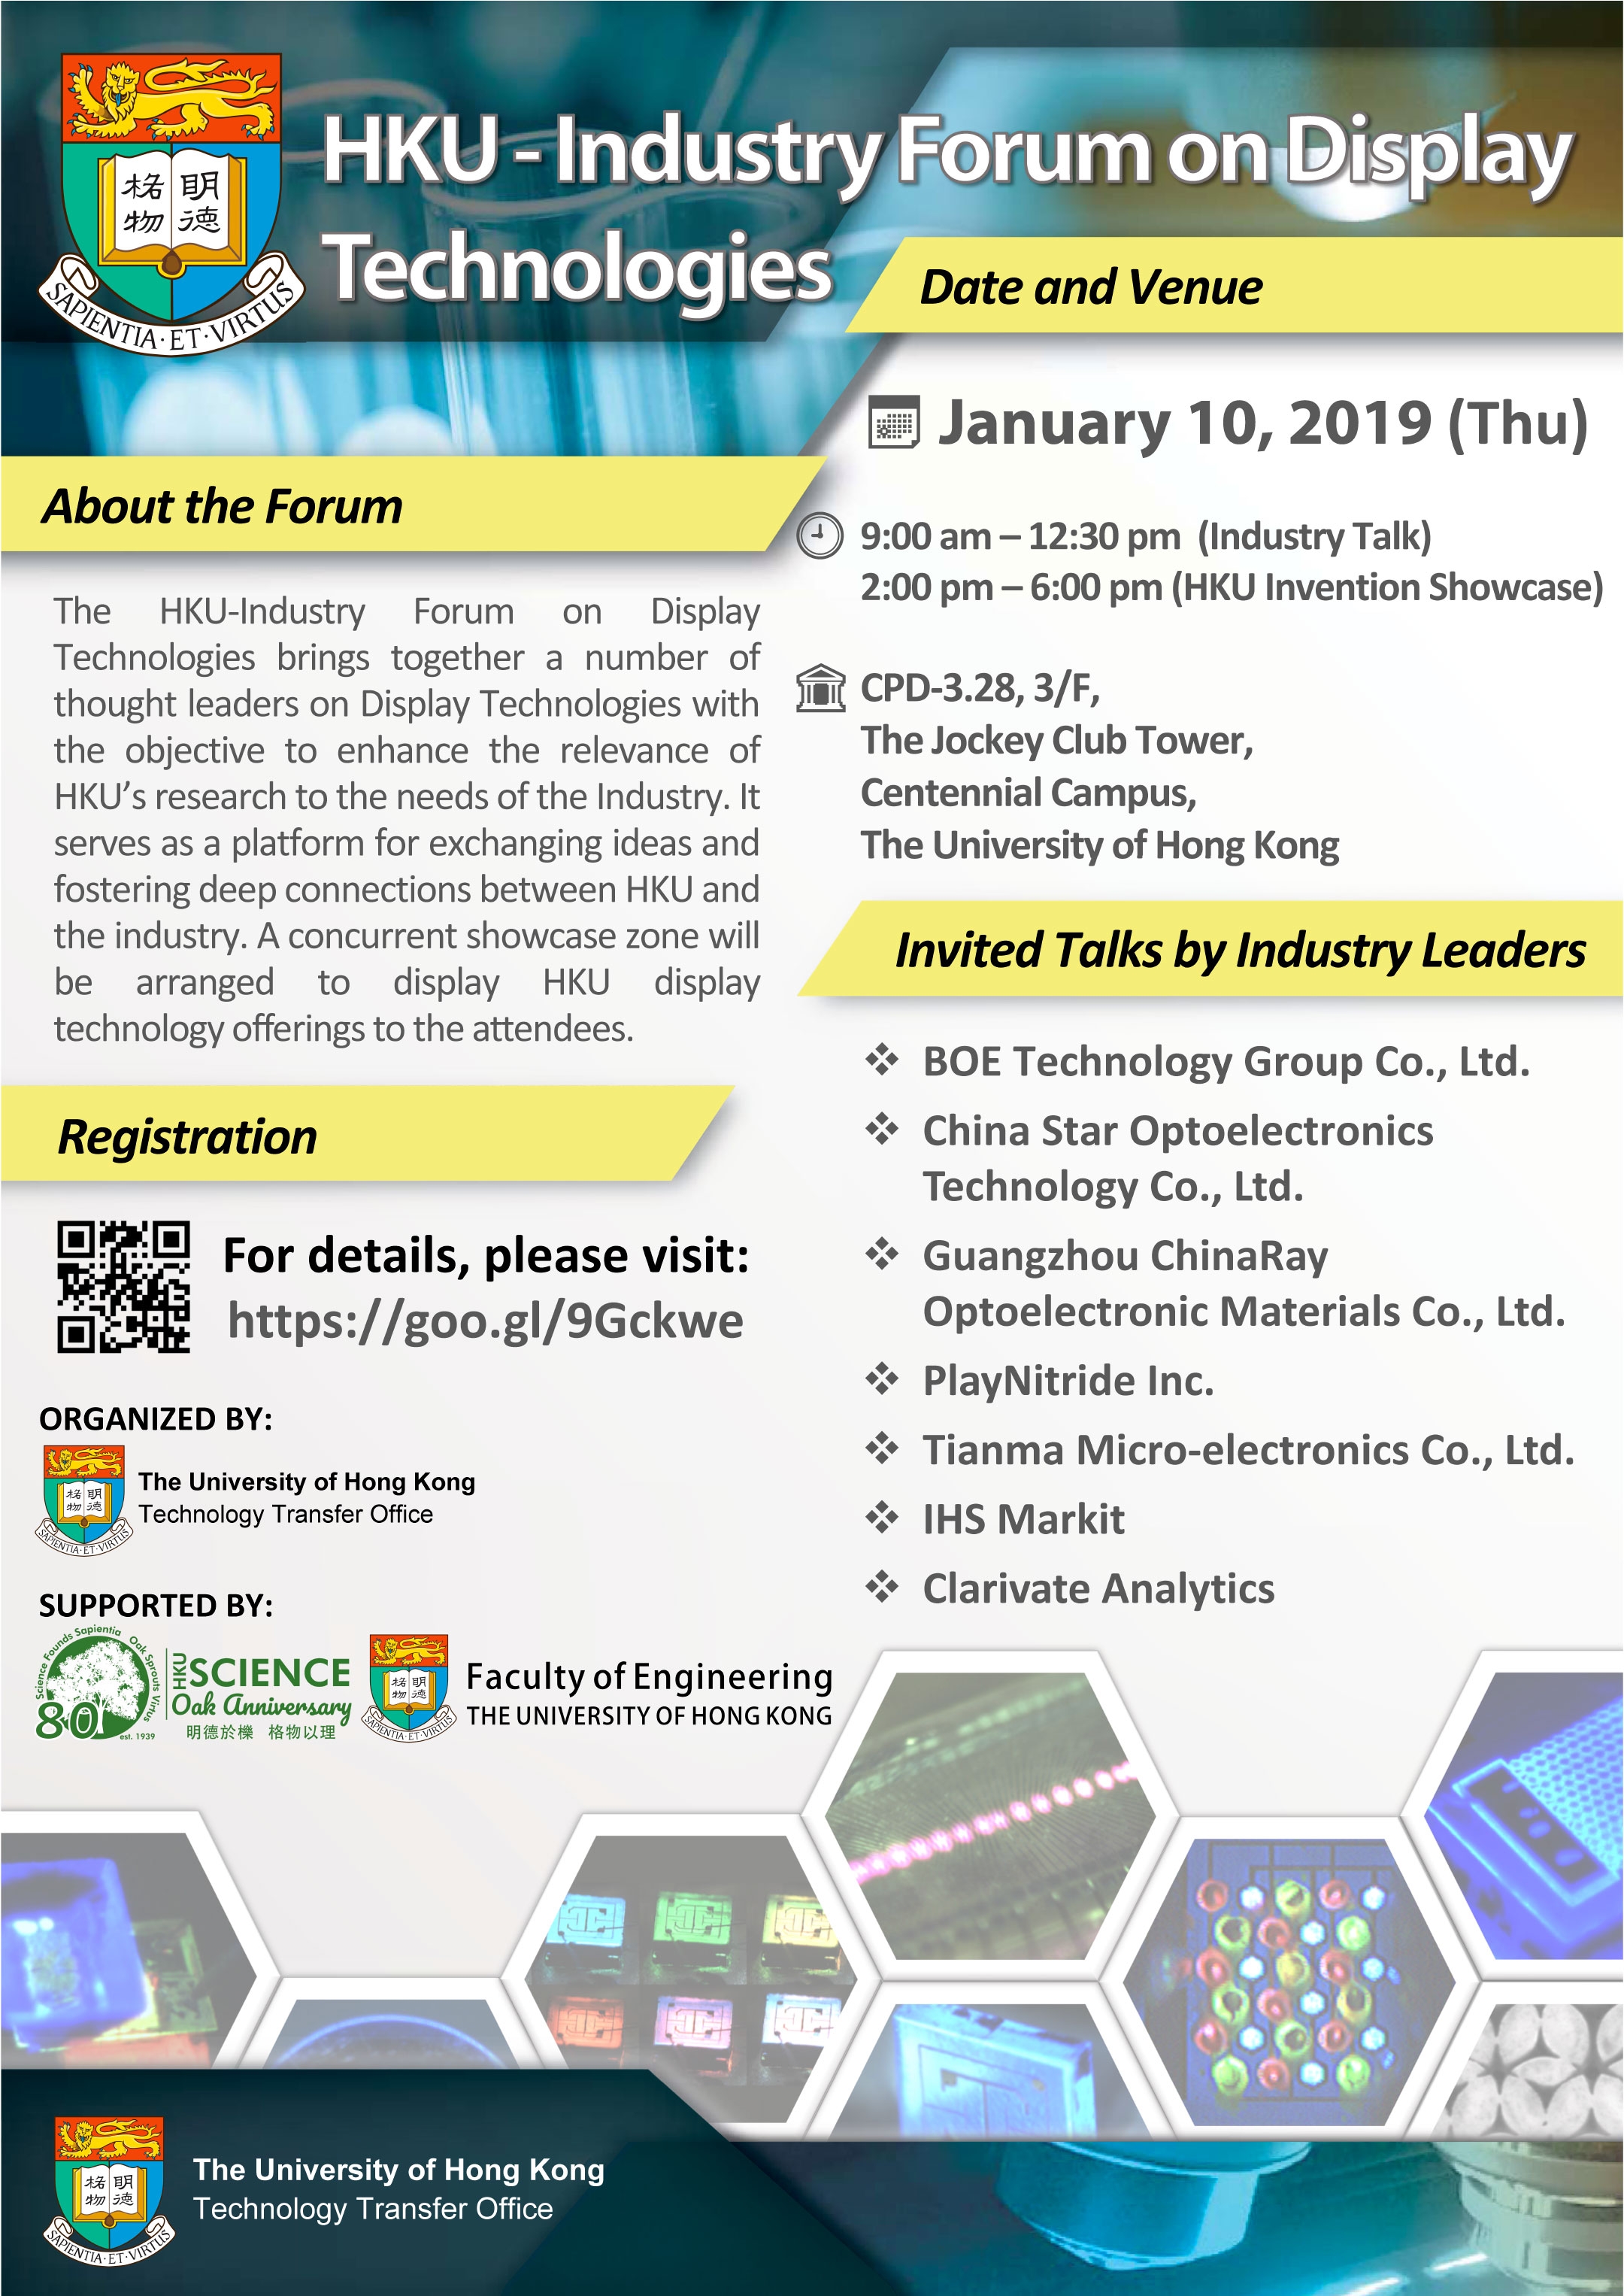 HKU-Industry Forum on Display Technologies